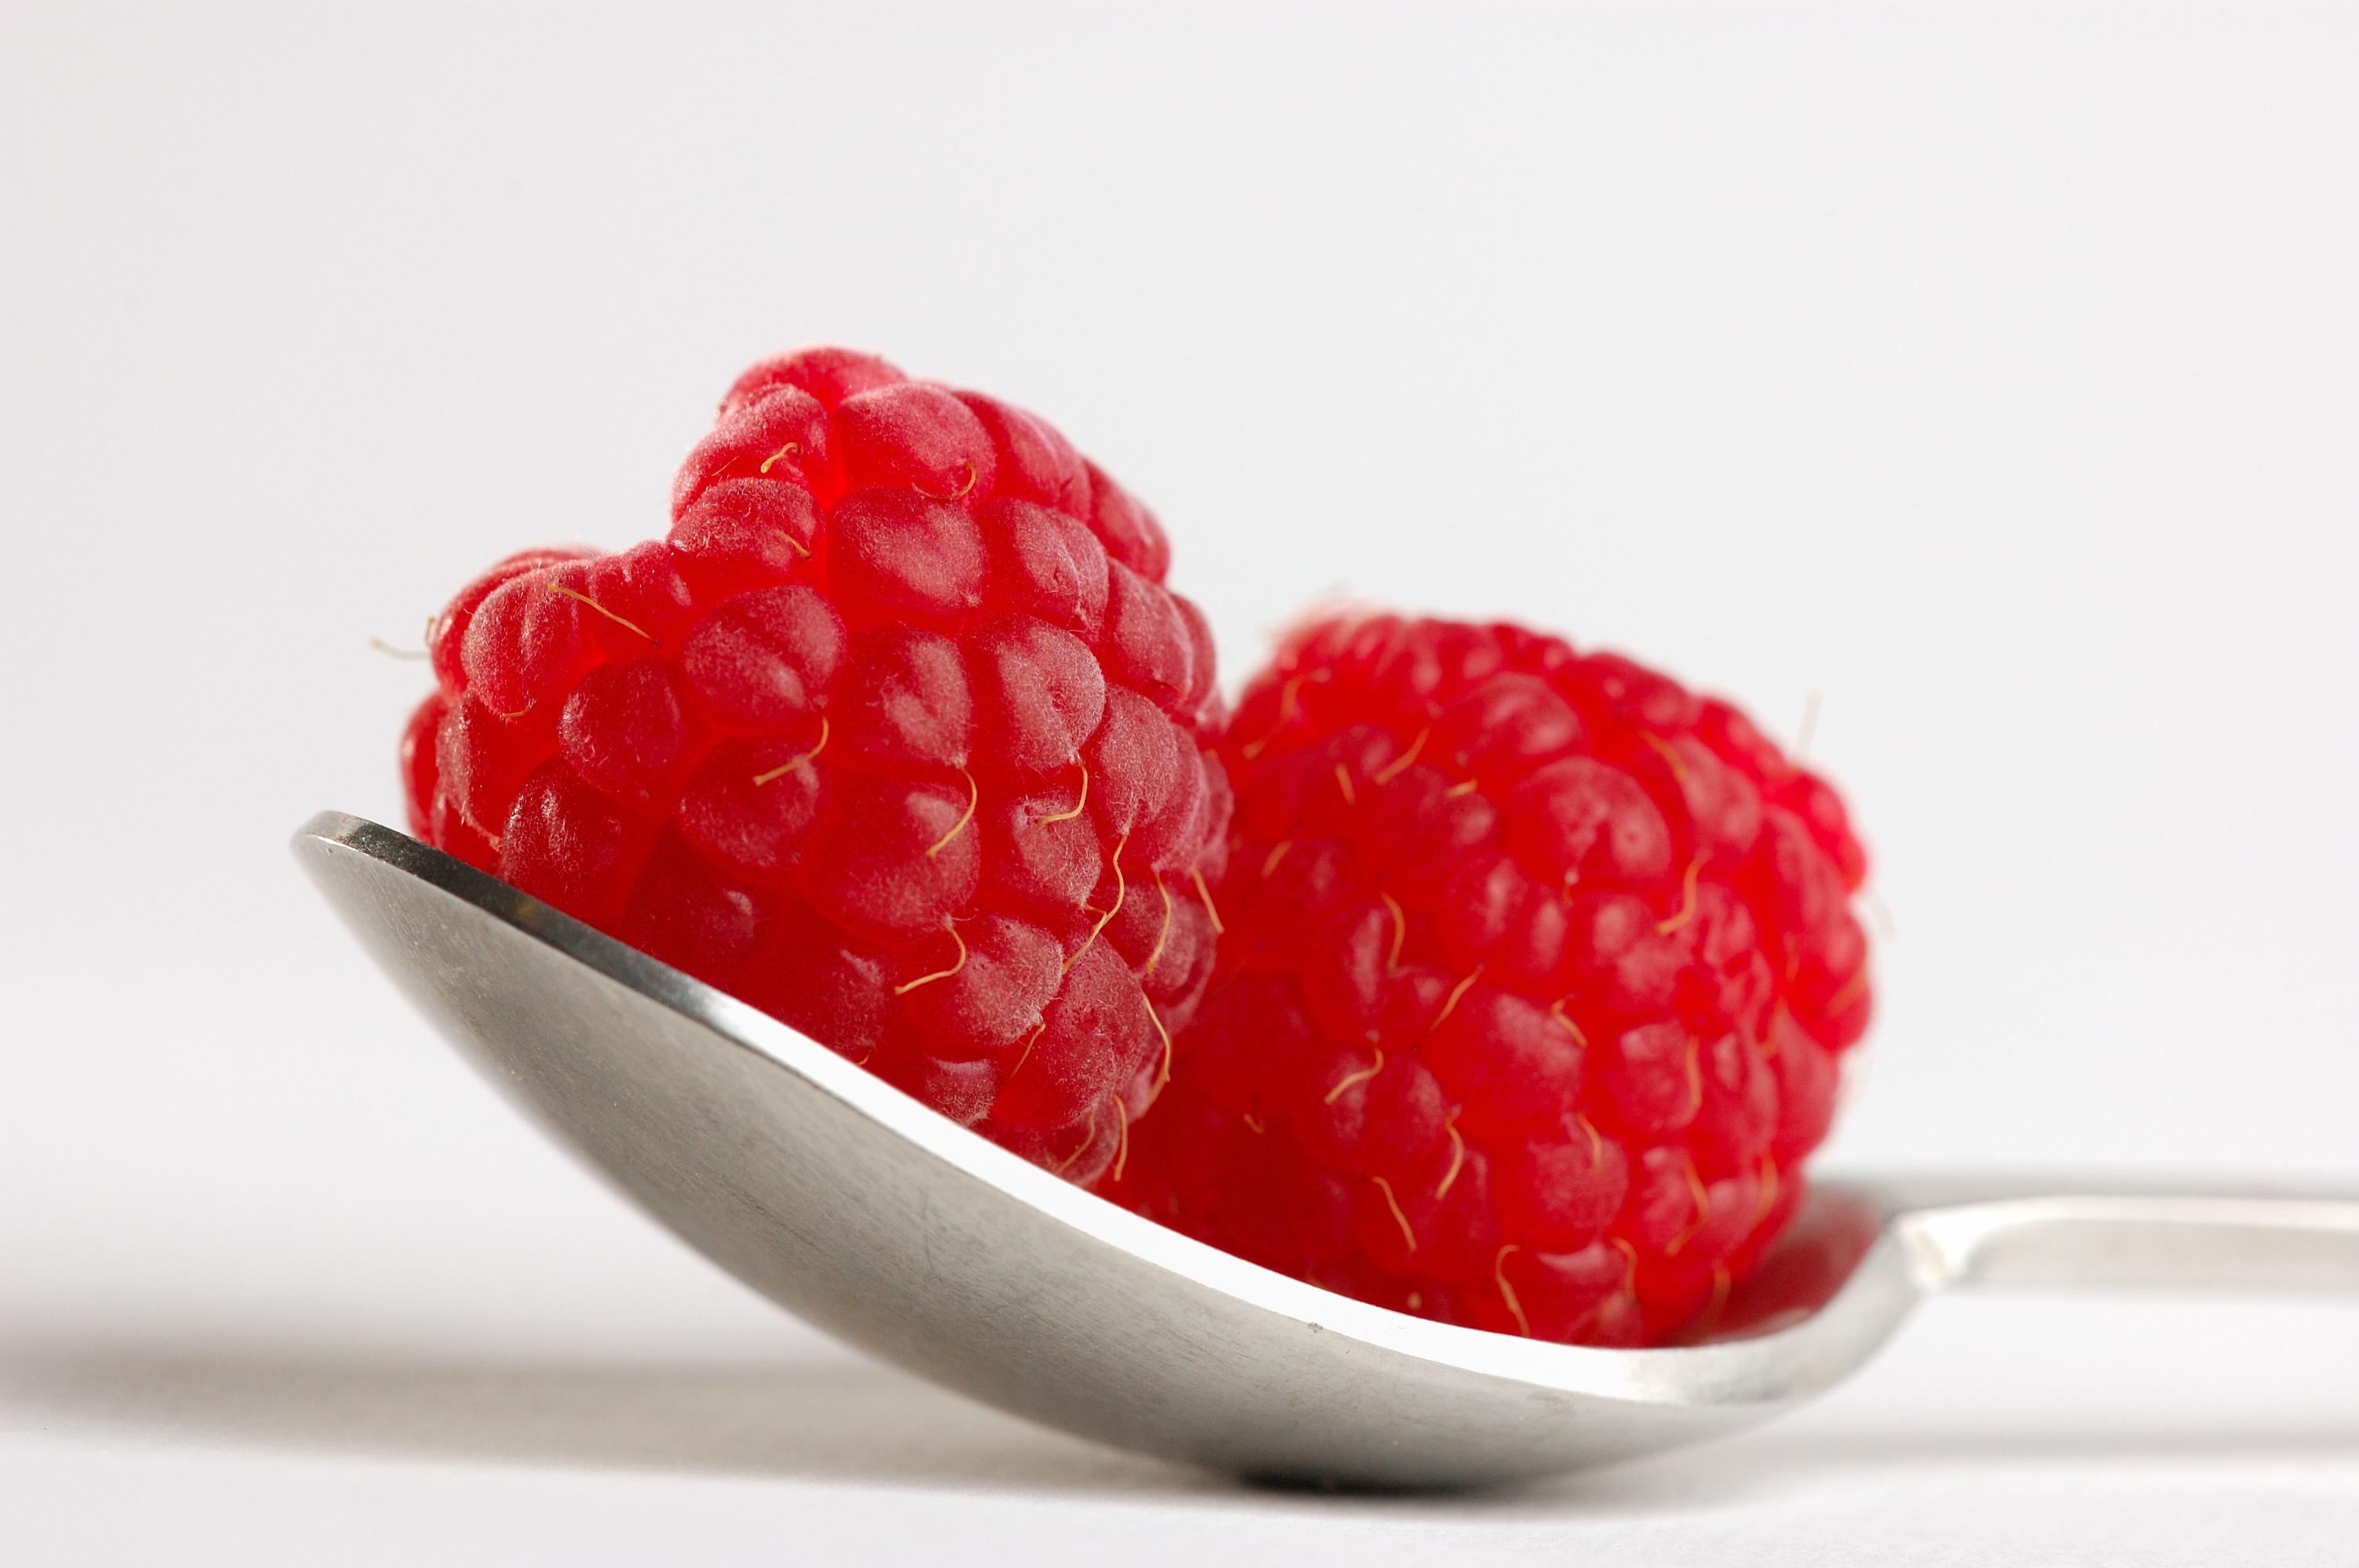 Two raspberries on a spoon